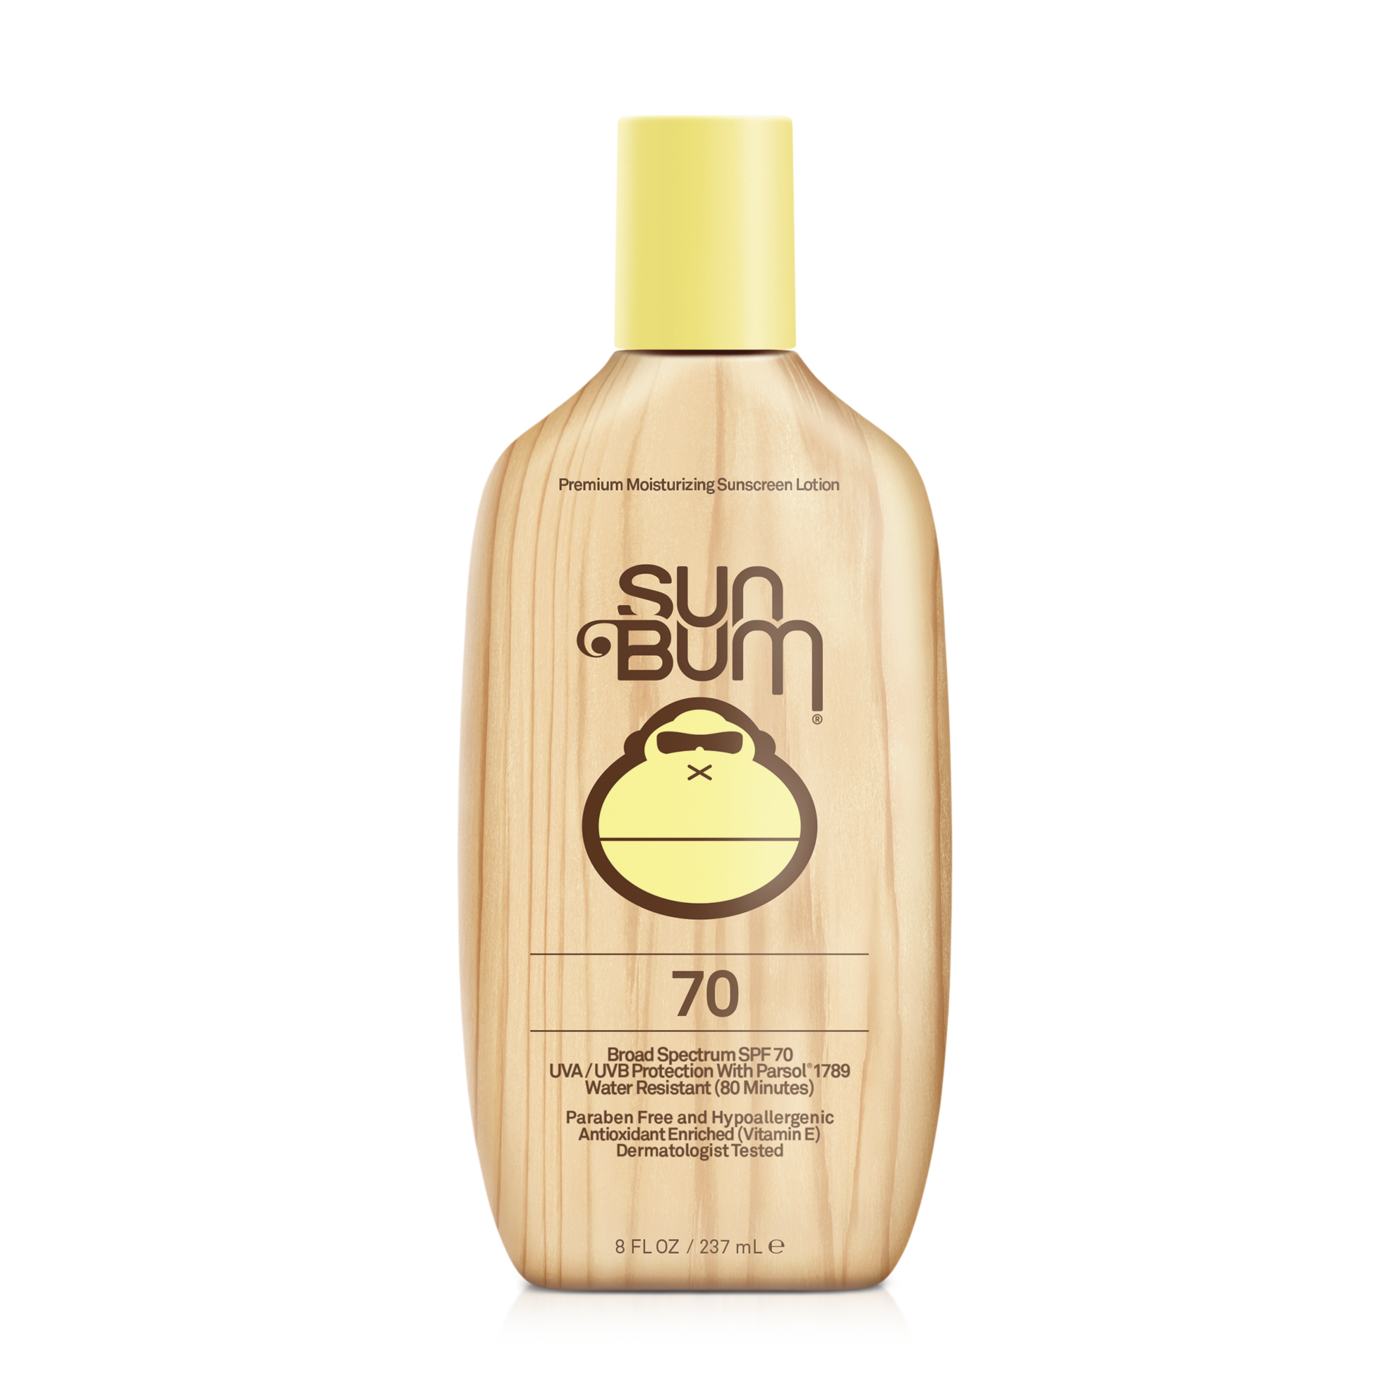 70 SPF SunBum Sunscreen 8 OZ - Urban Surf